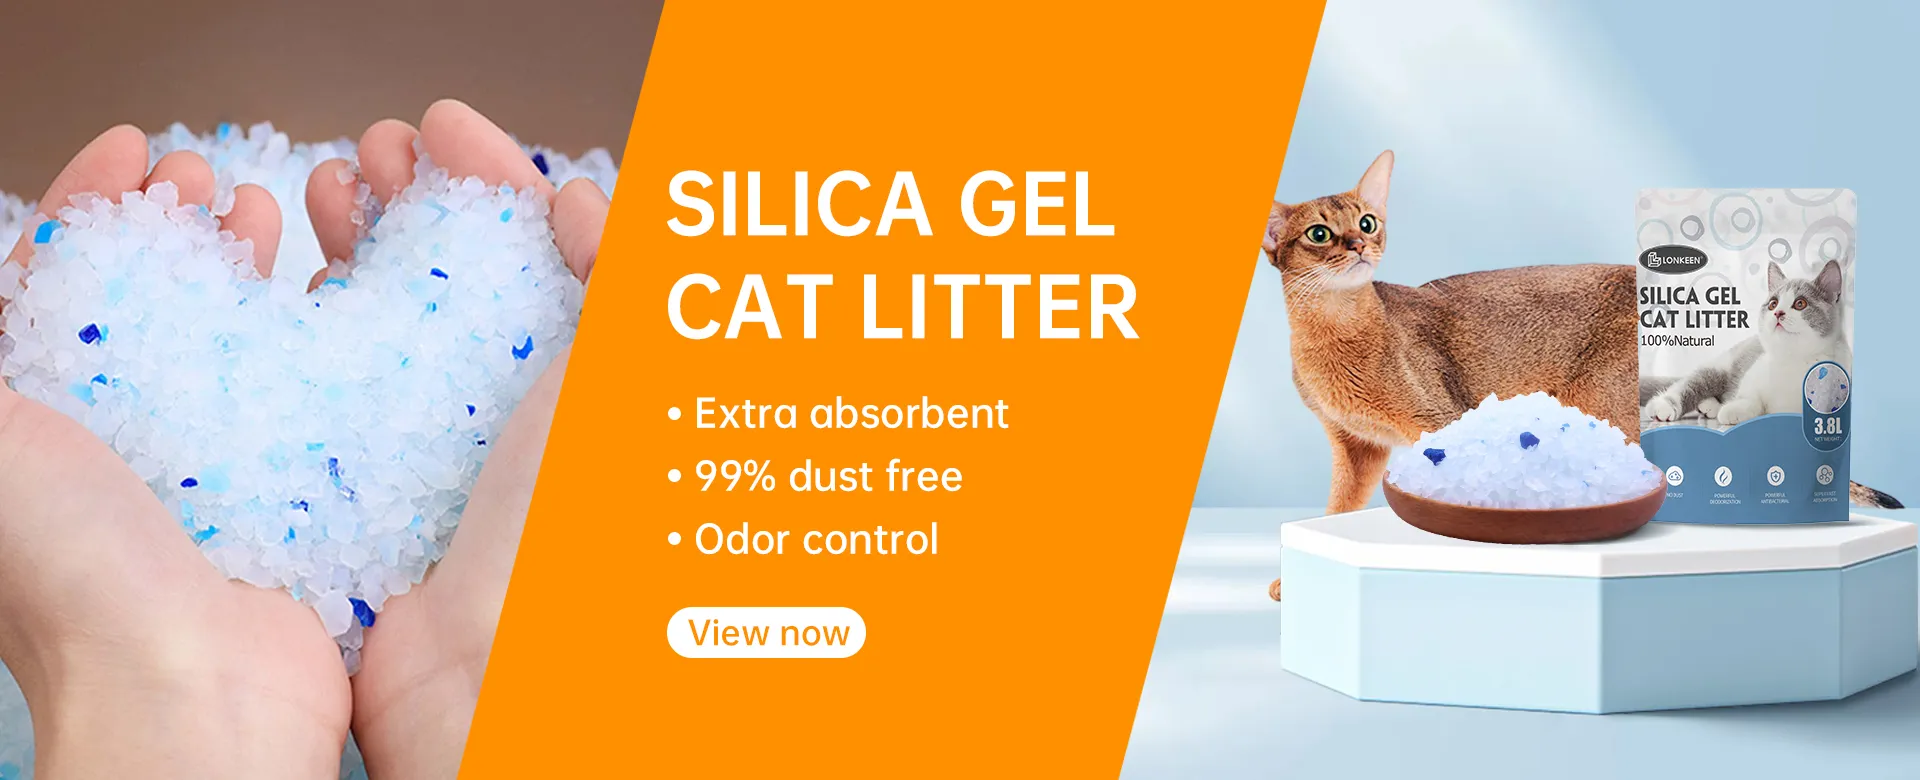 SILICA GEL CAT LITTER